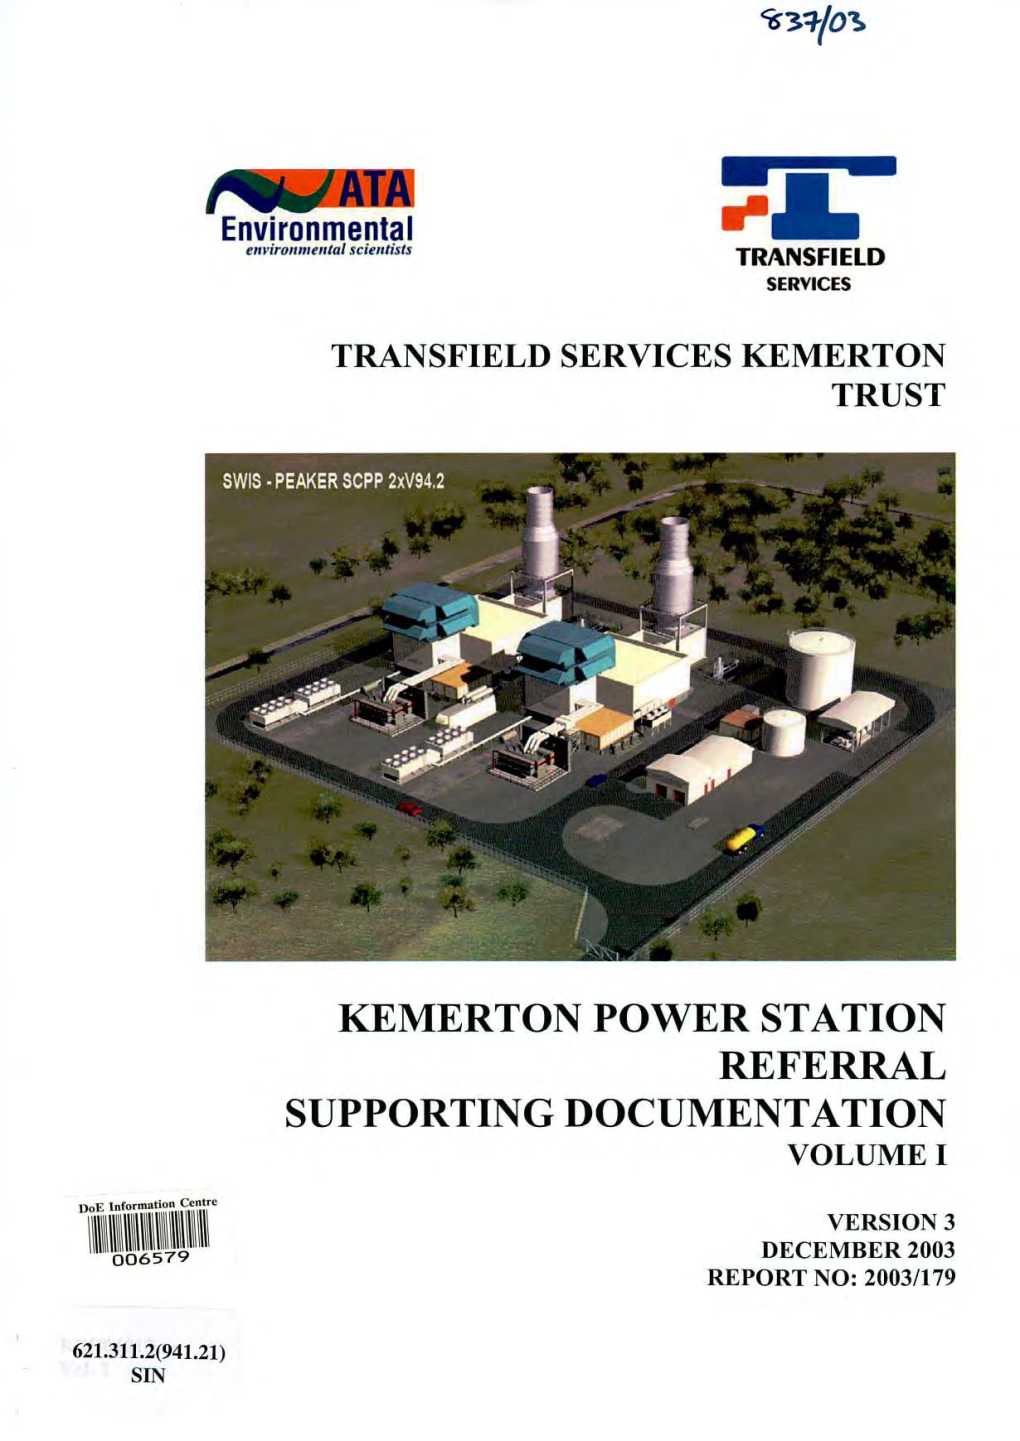 Kemerton Power Station Referral Supporting Documentation Volume I